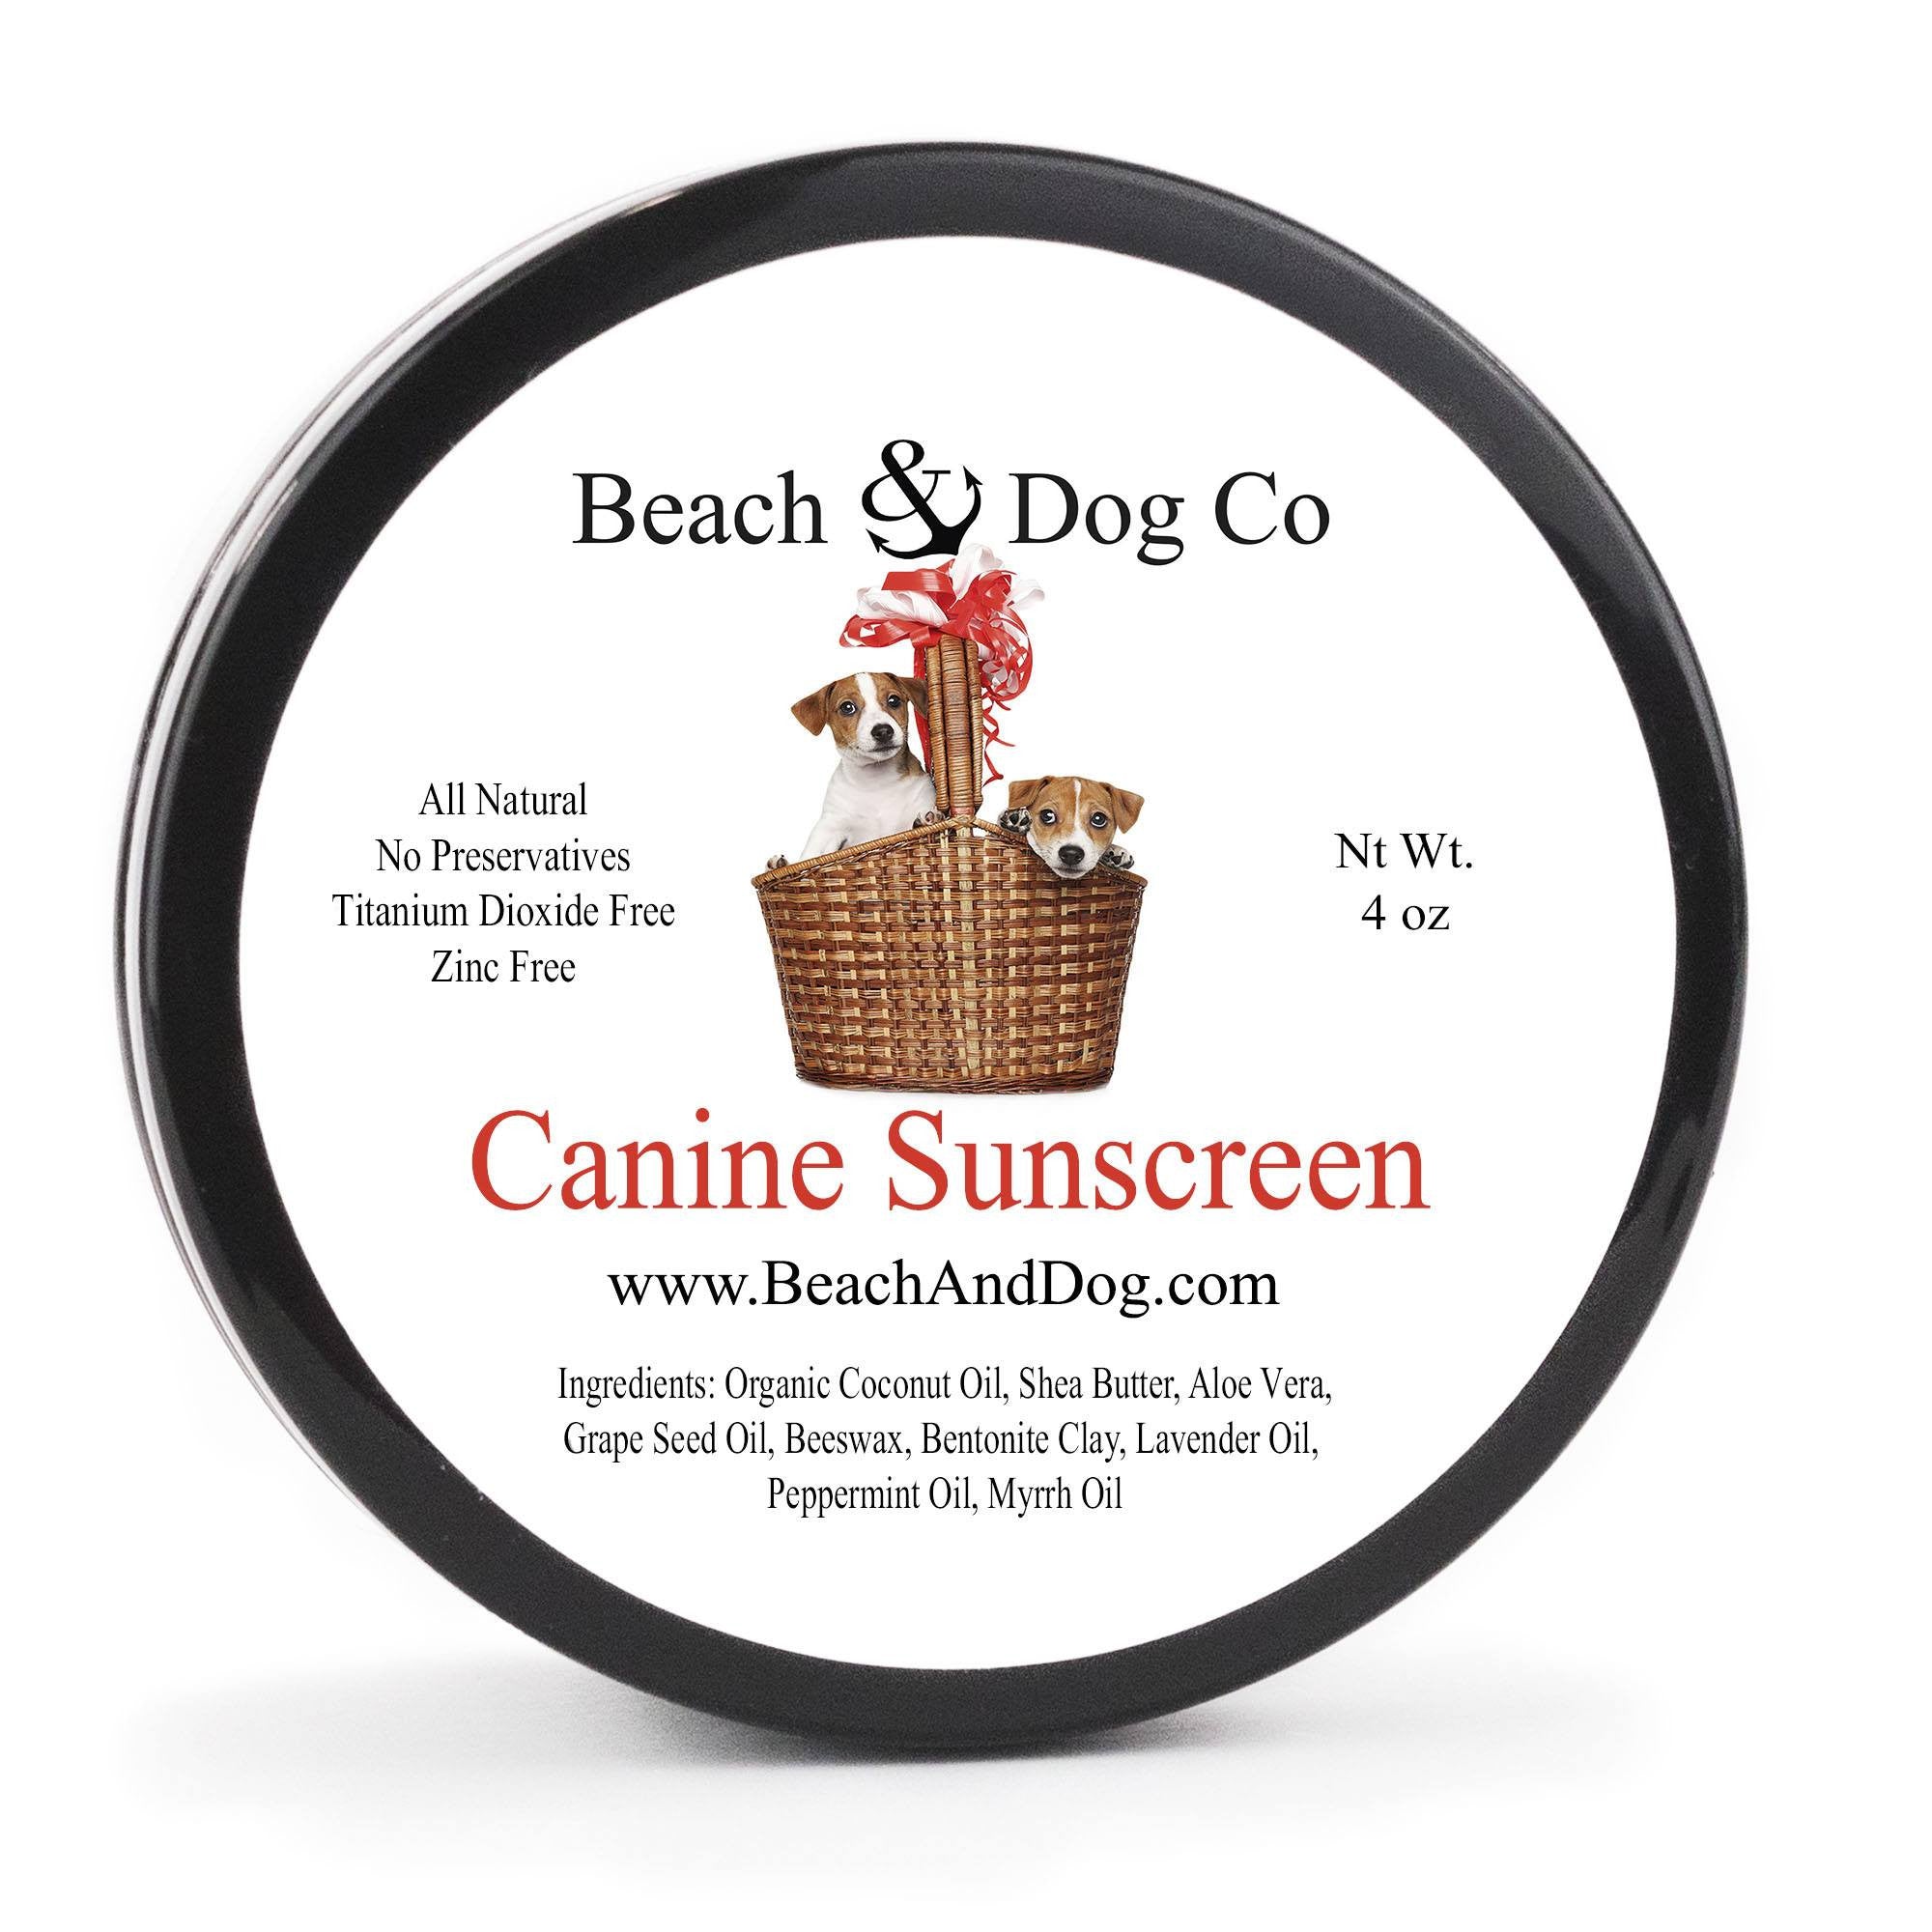 Canine Sunscreen (4 oz) Zinc and Titanium Dioxide Free - Beach & Dog Co.